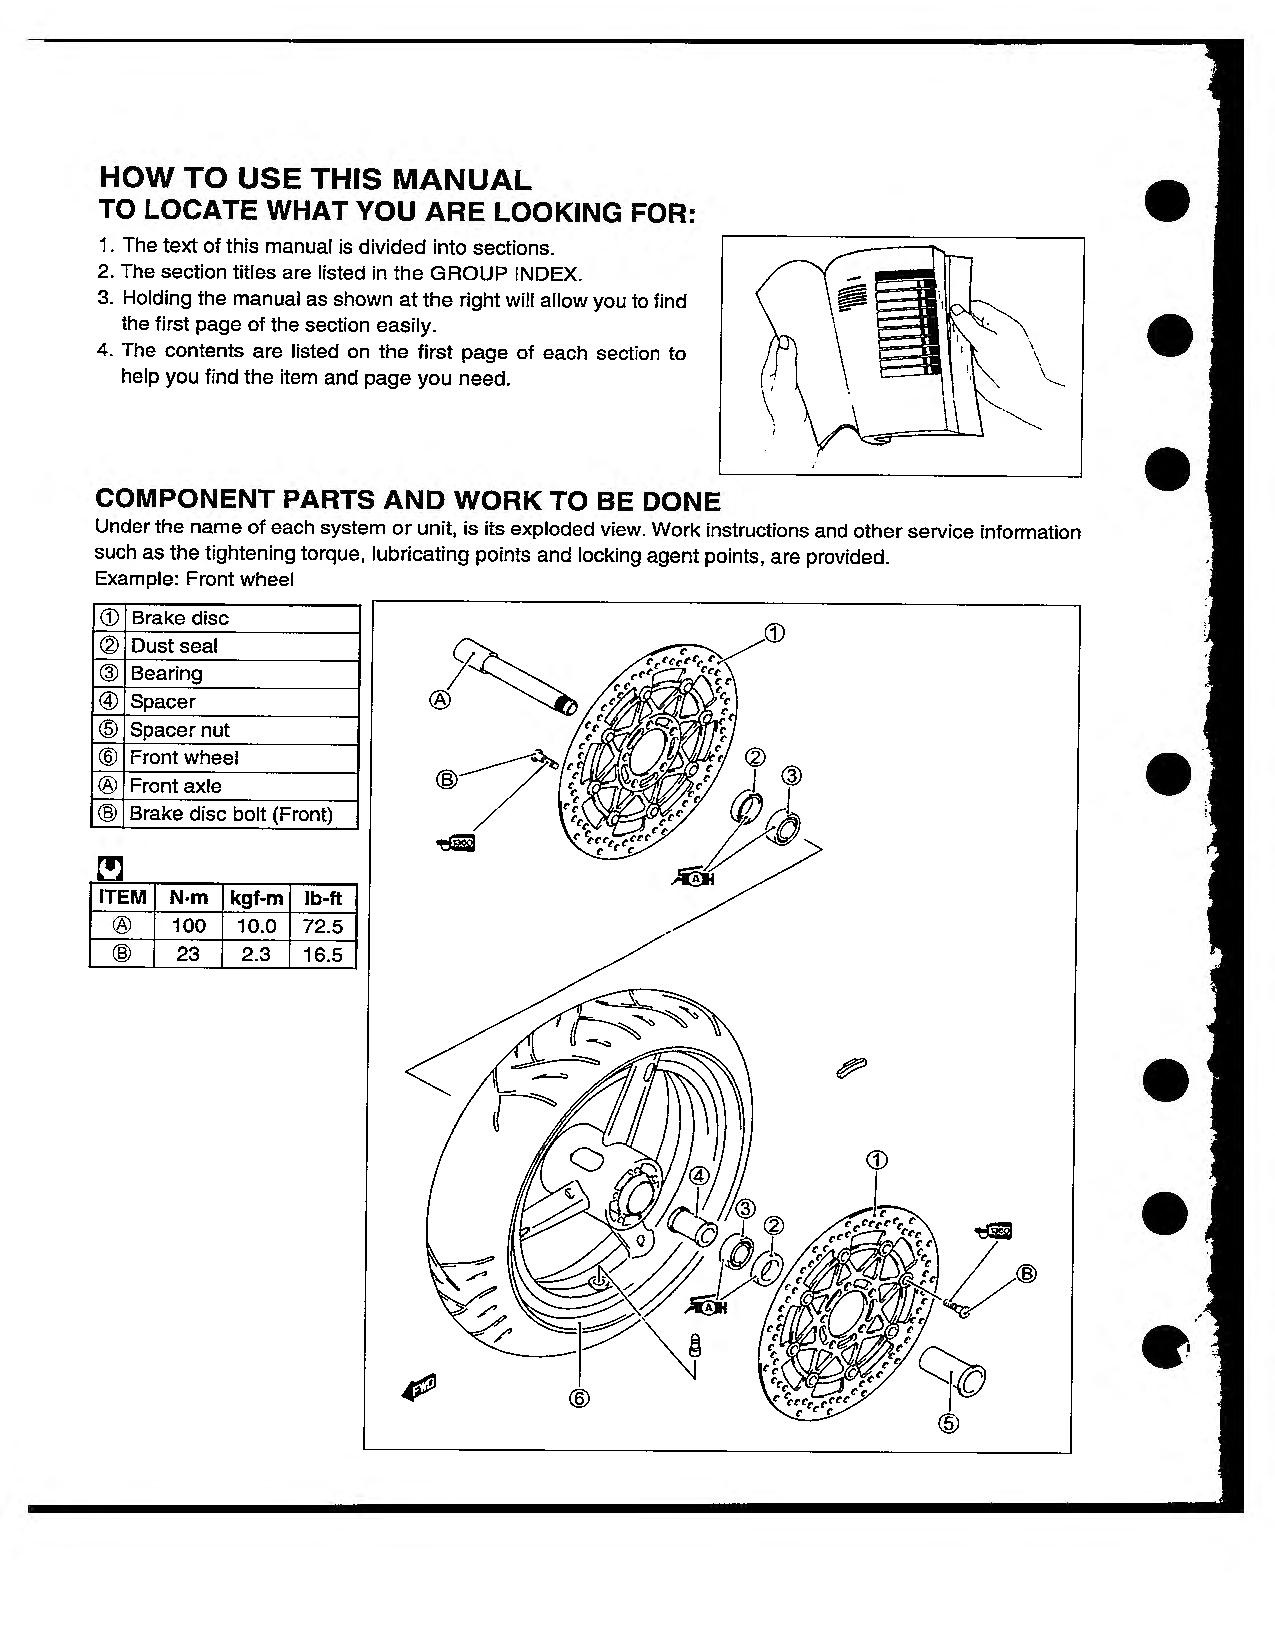 File:Suzuki GSX-R750 K4-K5 Service Manual.pdf